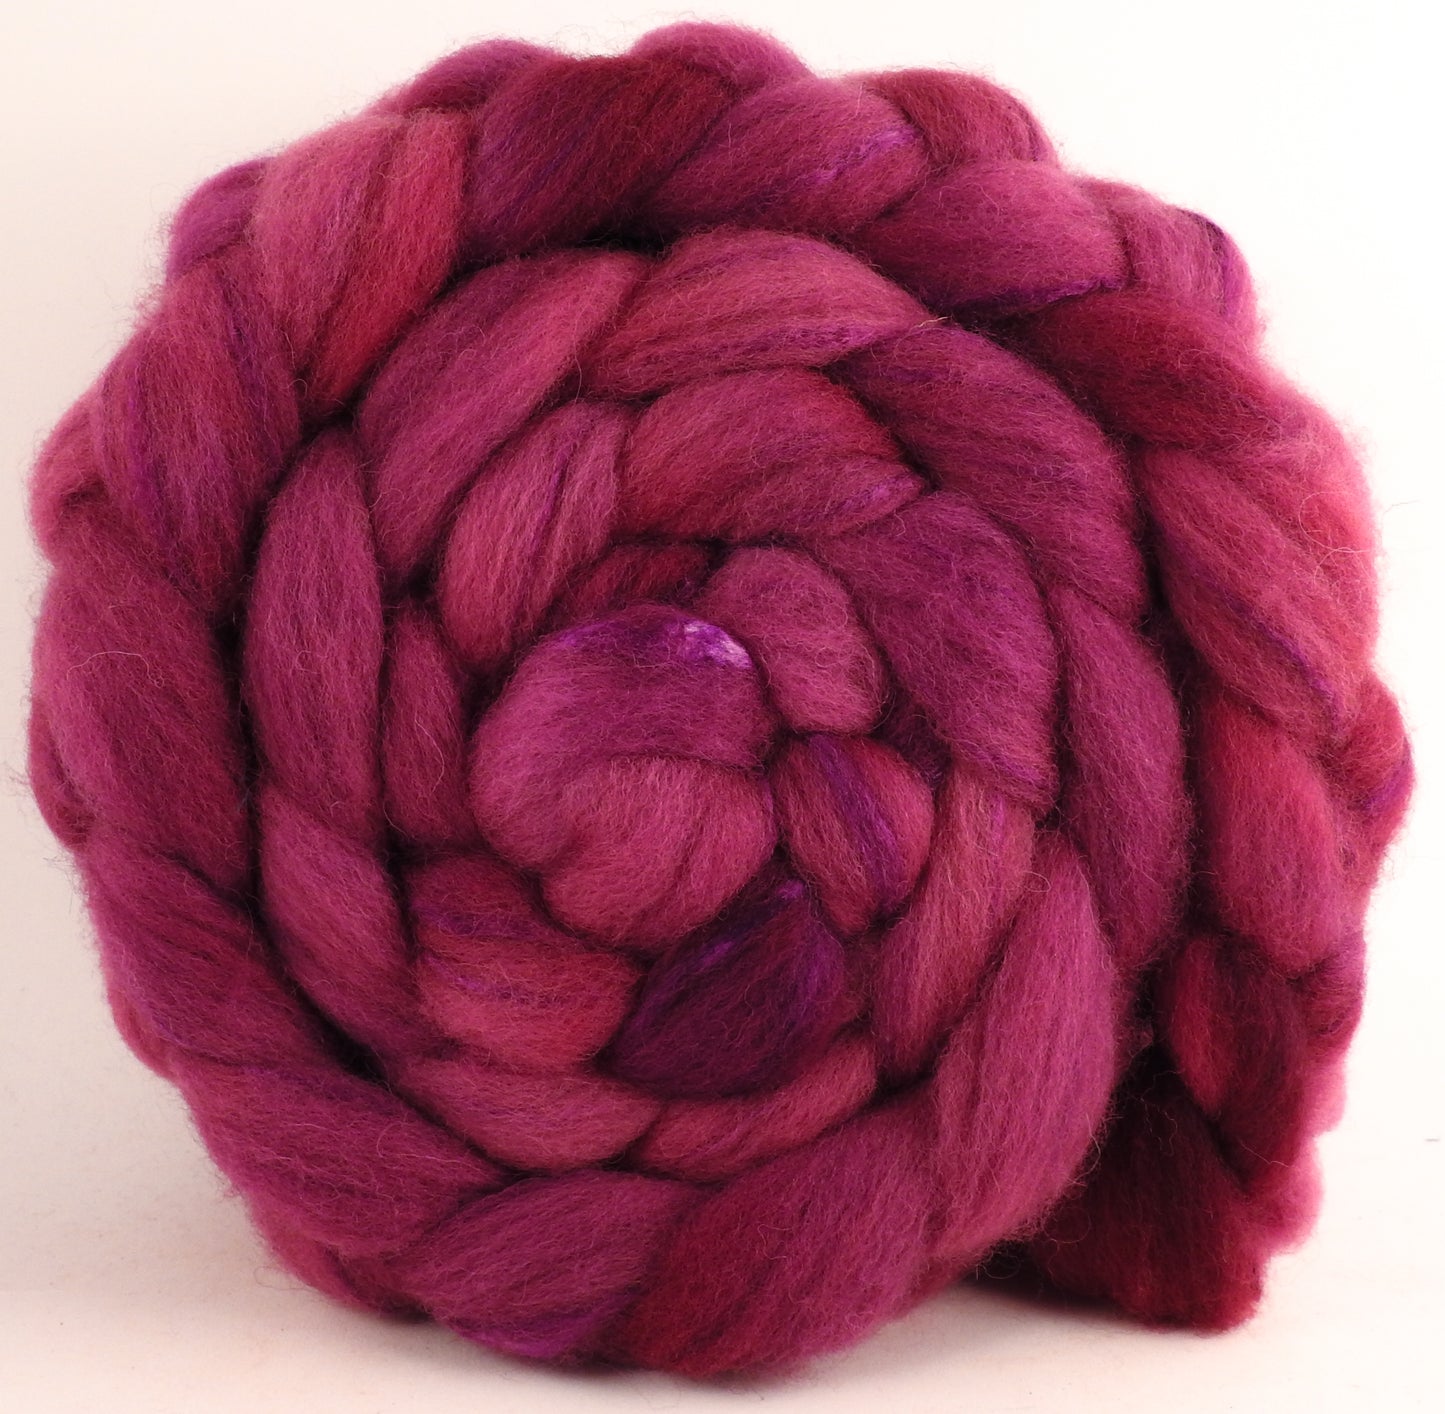 Shetland/ Tussah Silk (70/30) - Redbud - (6 oz)